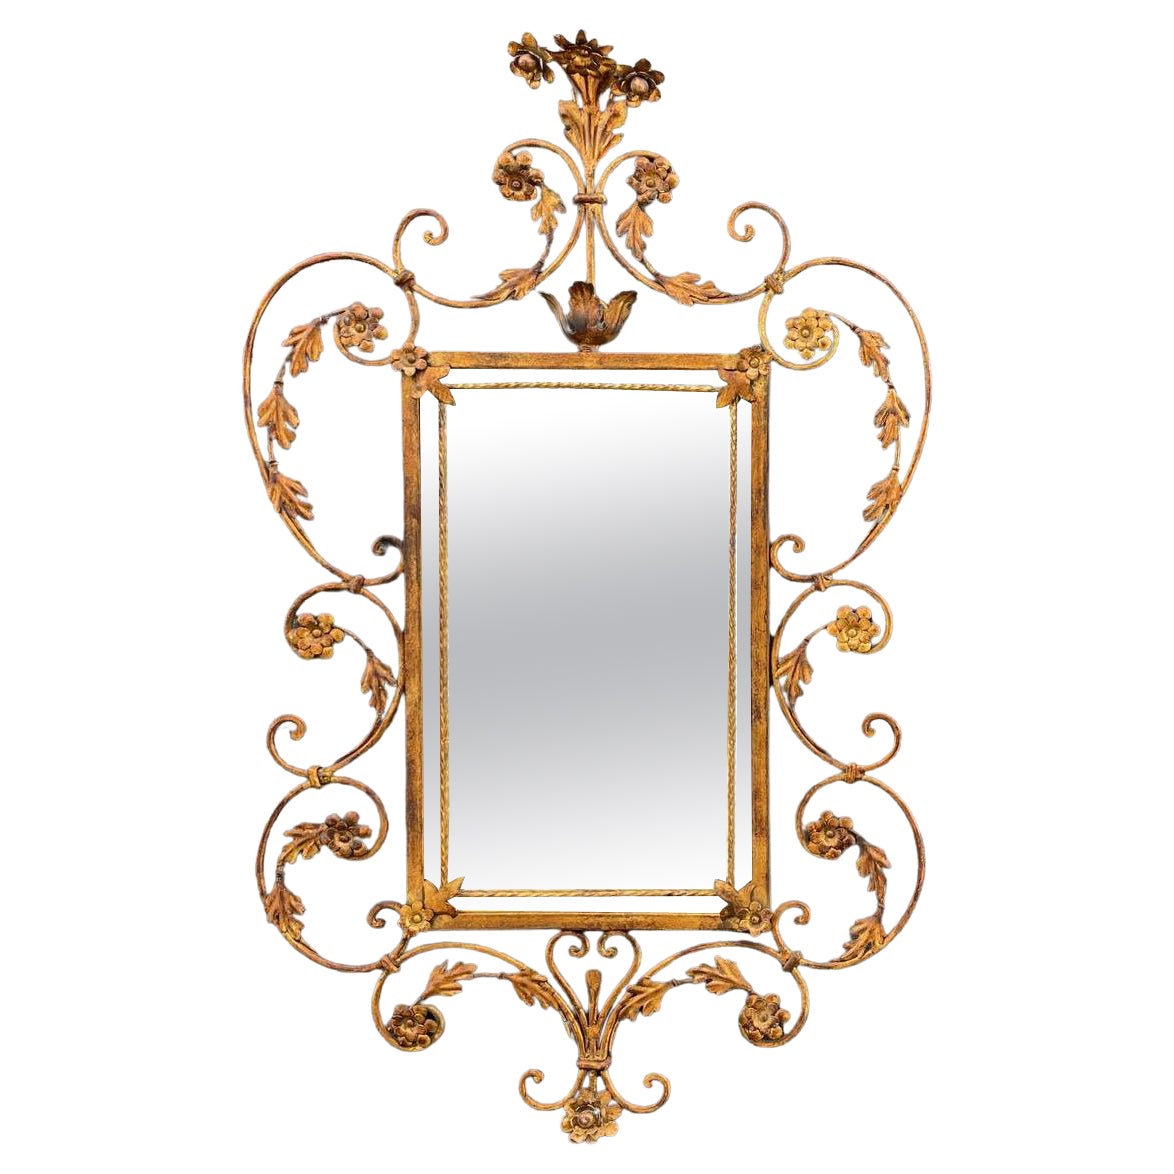 Antique Italian Gilt-Iron Rococo Style Mirror For Sale